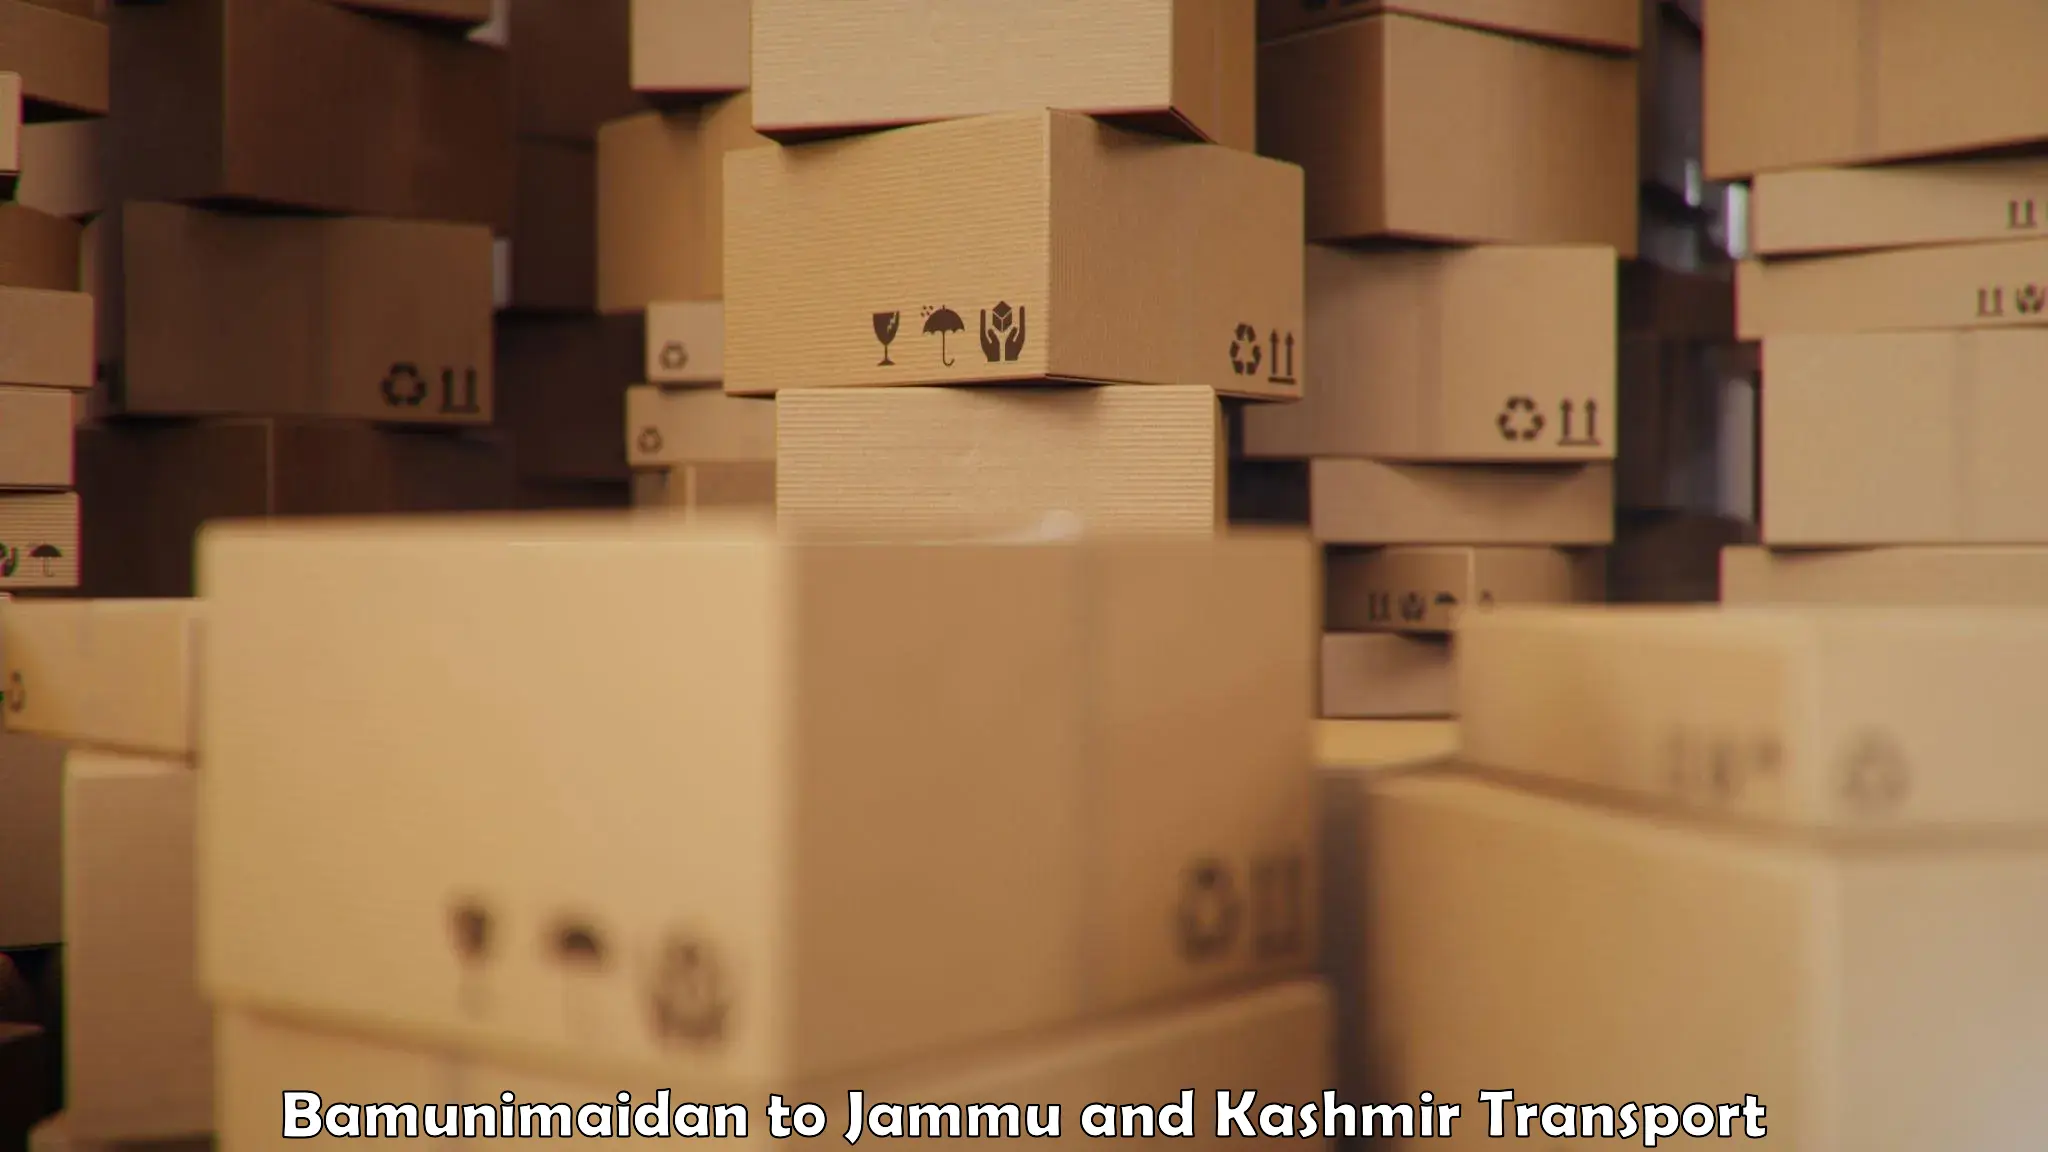 Truck transport companies in India Bamunimaidan to Kulgam